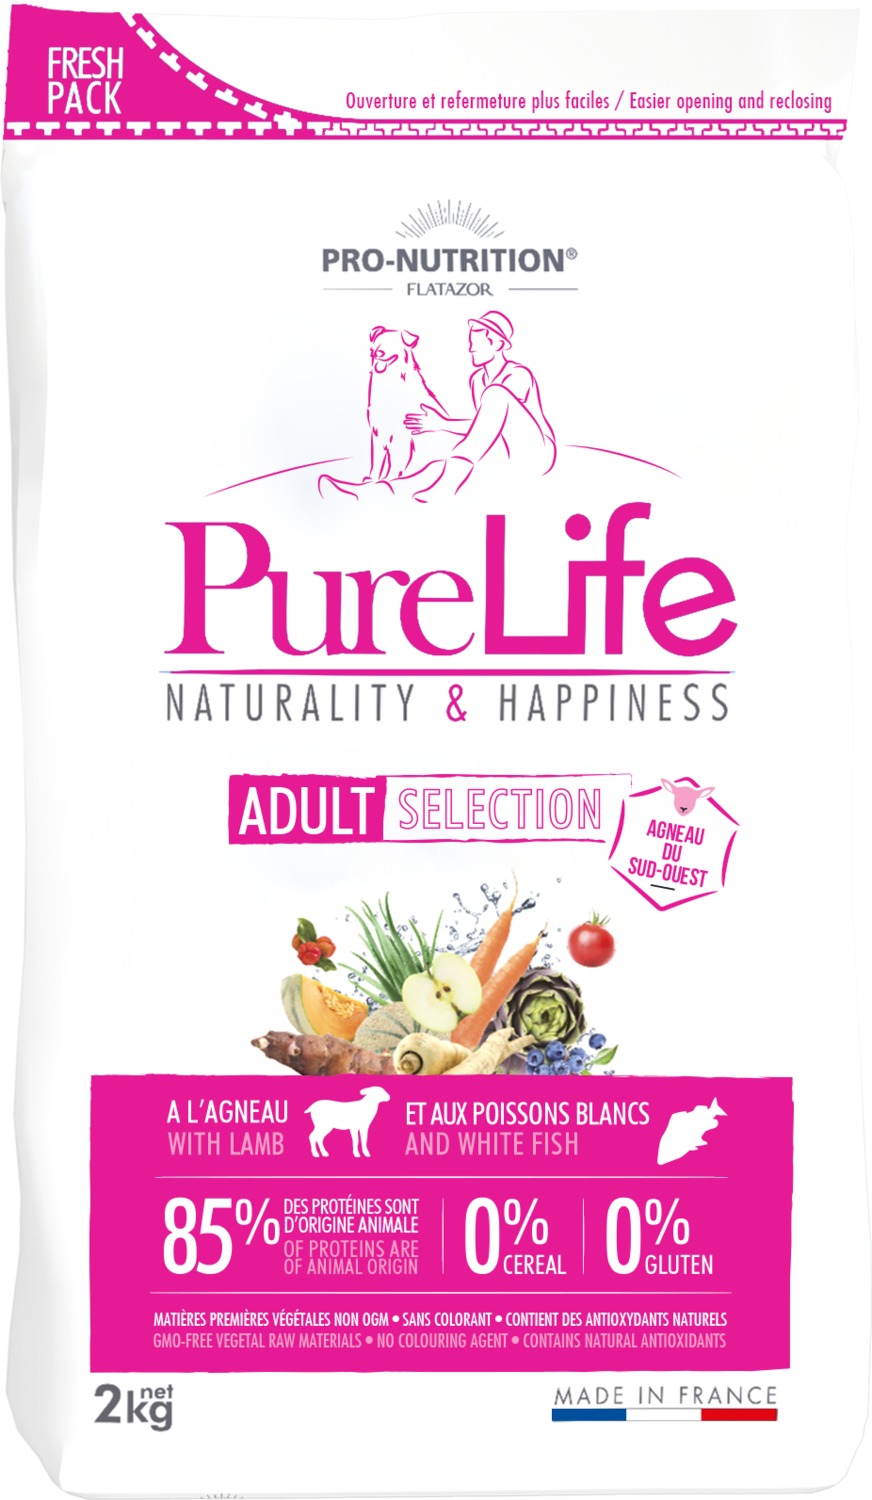 Pro-Nutrition Pure Life Digestion Sensible au Agneau with Lamb - zoom